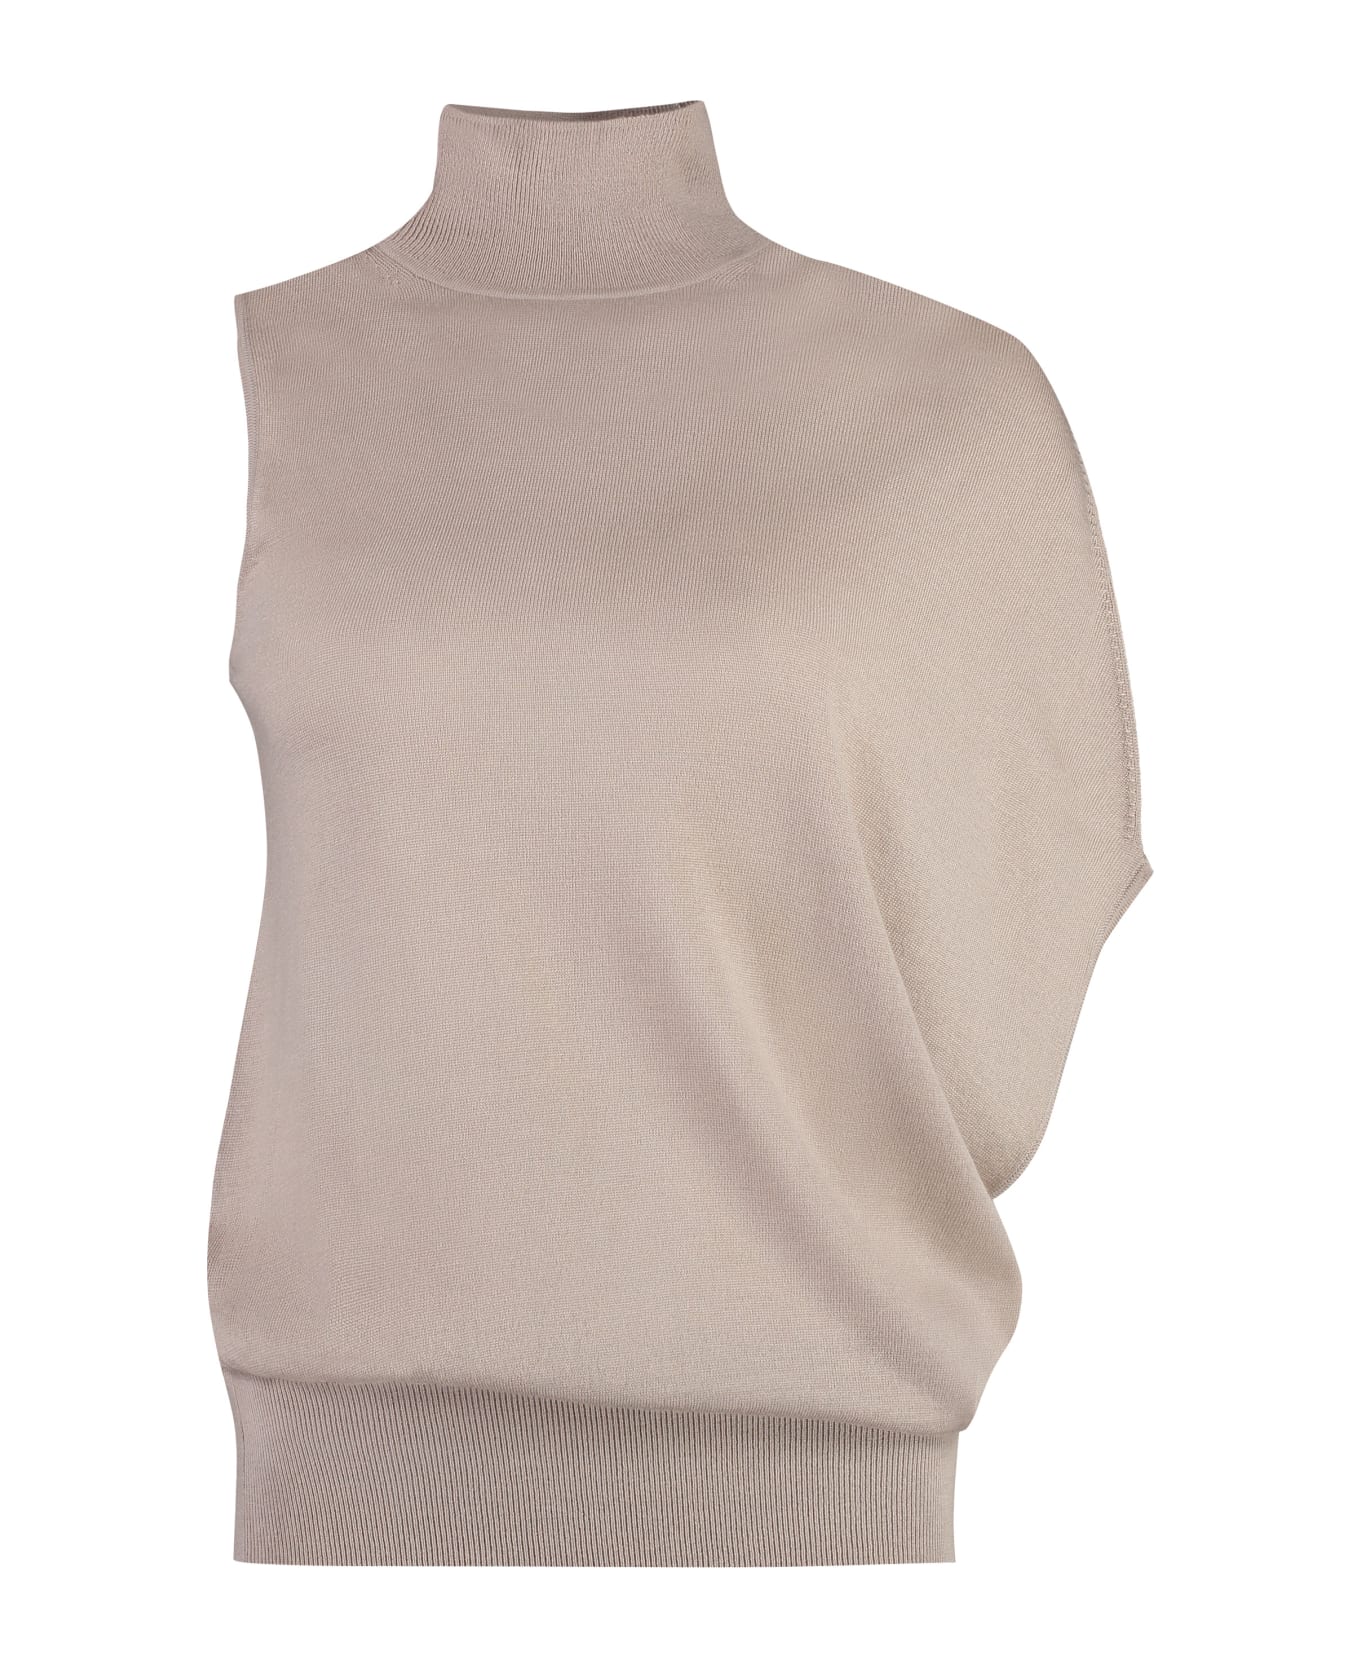 Calvin Klein Sleeveless Turtleneck Sweater - Neutral Taupe